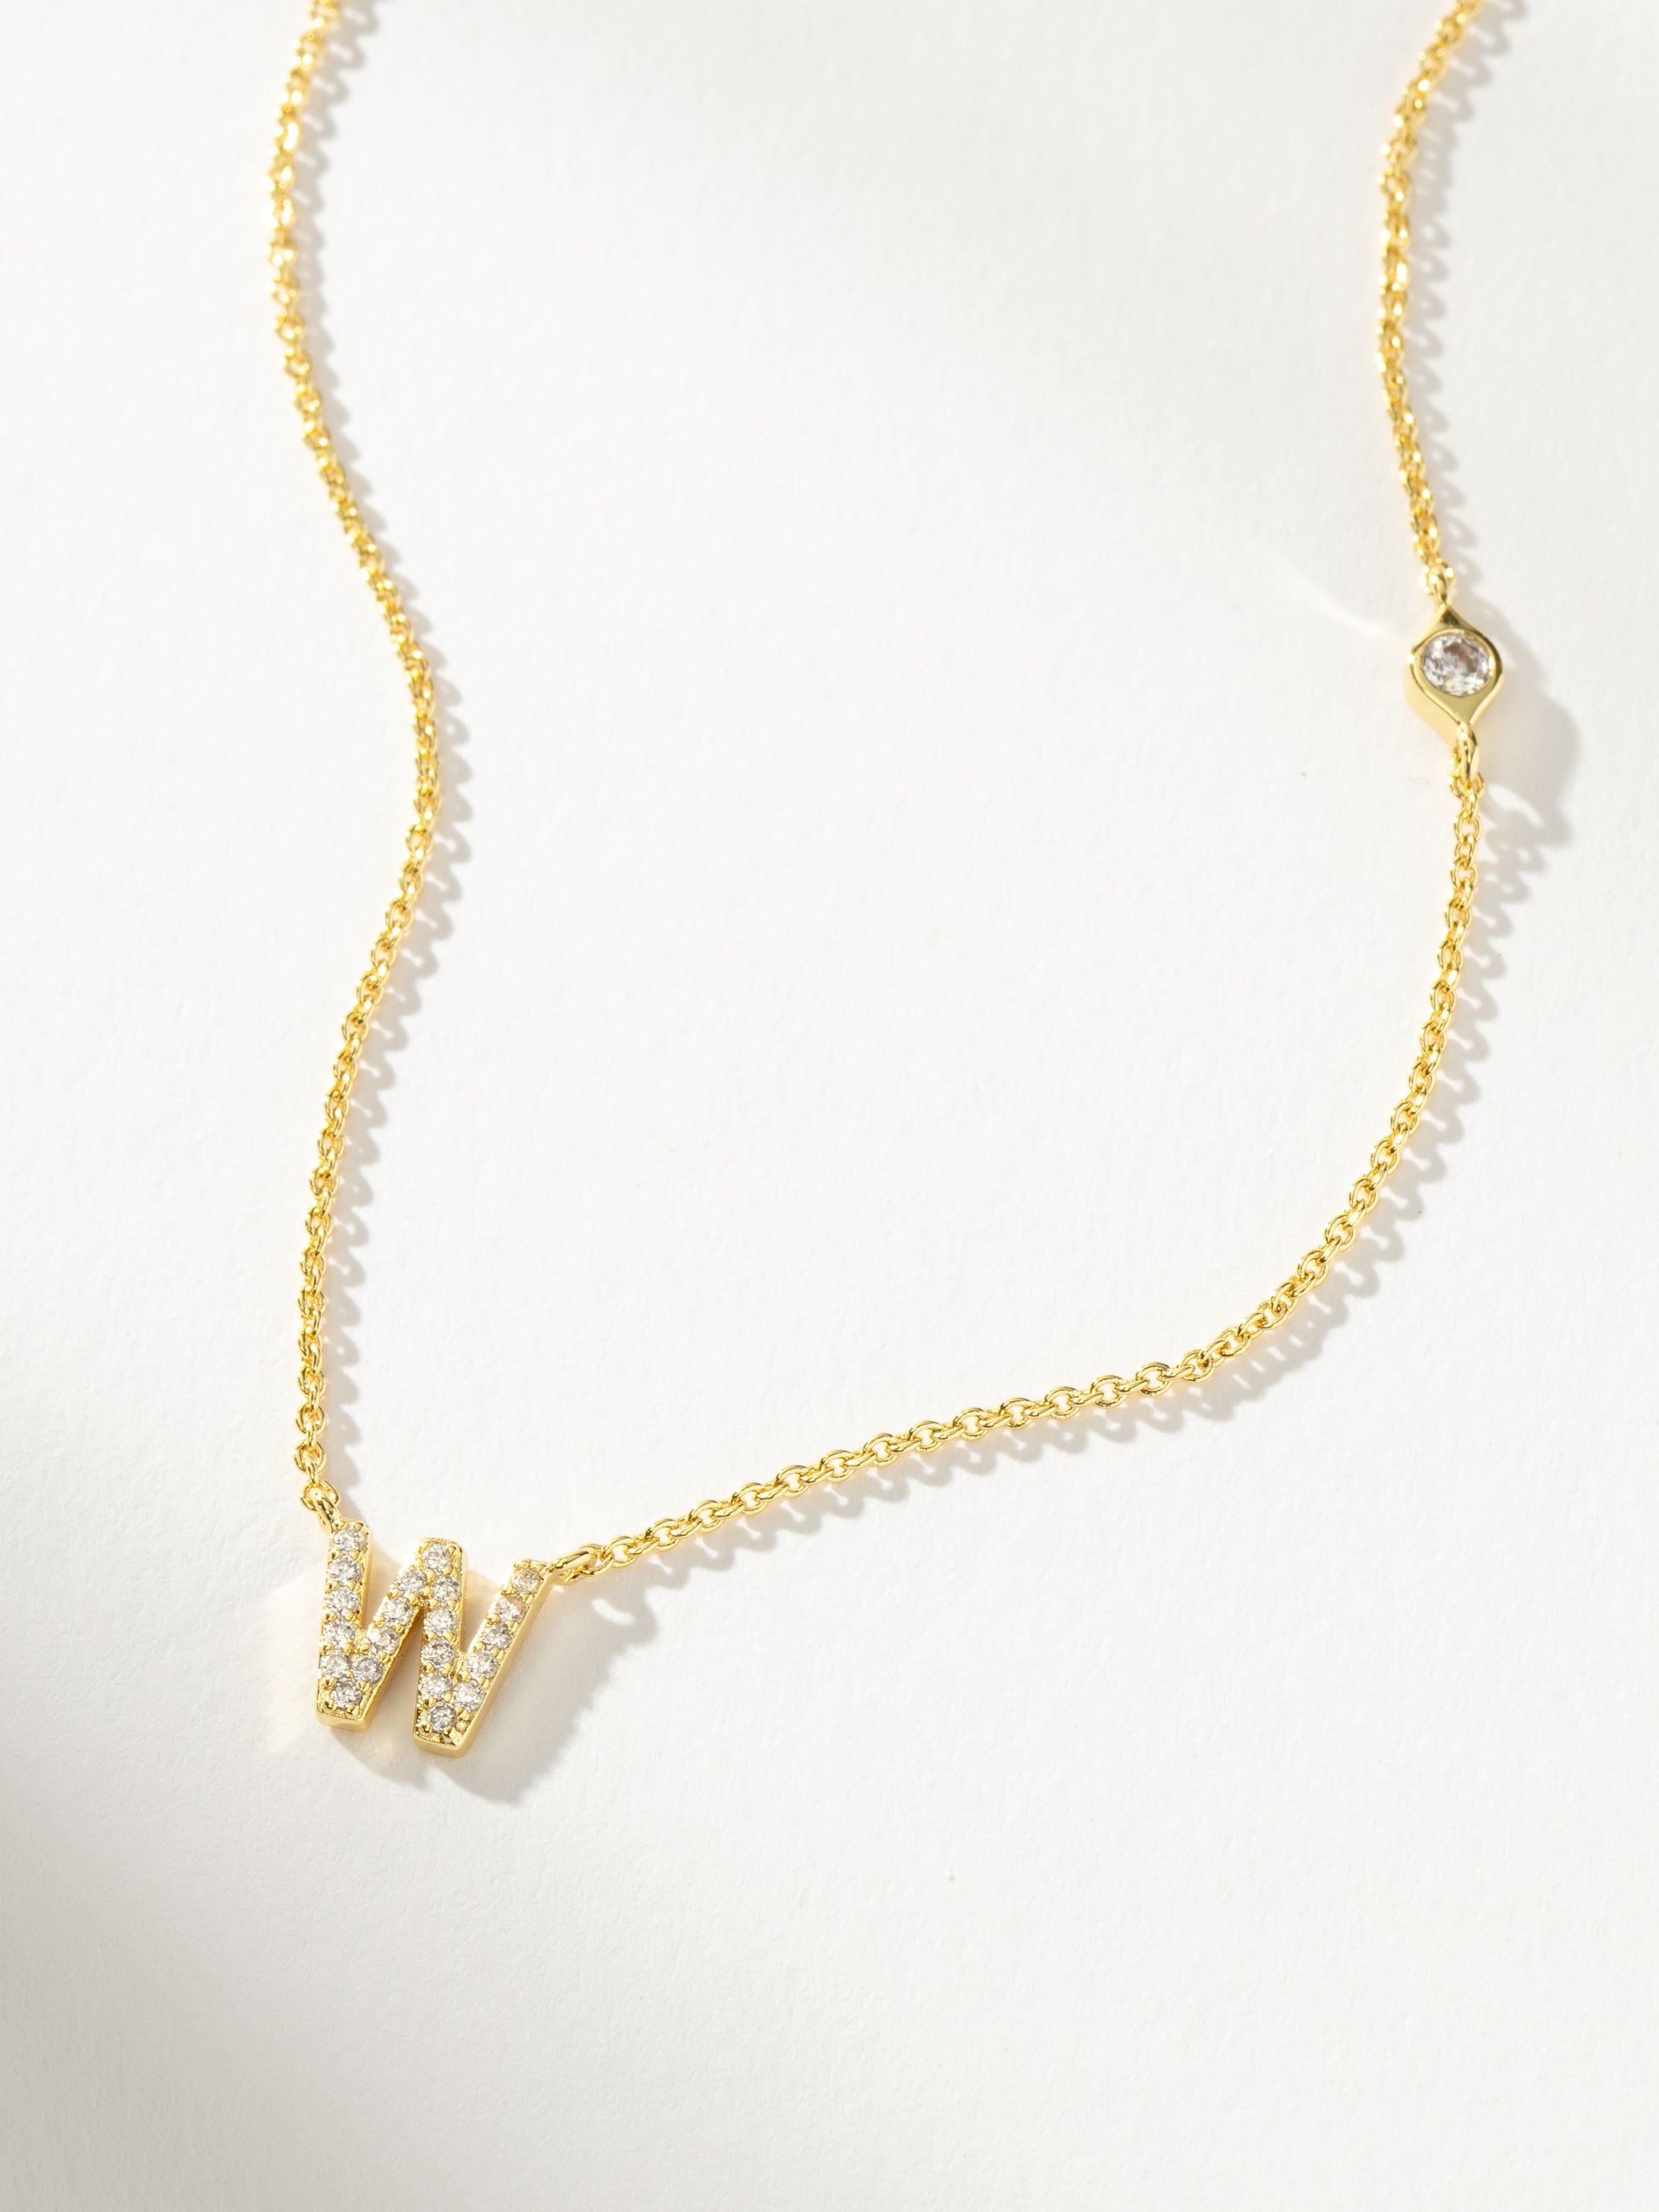 Pavé Initial Necklace | Gold W | Product Detail Image | Uncommon James